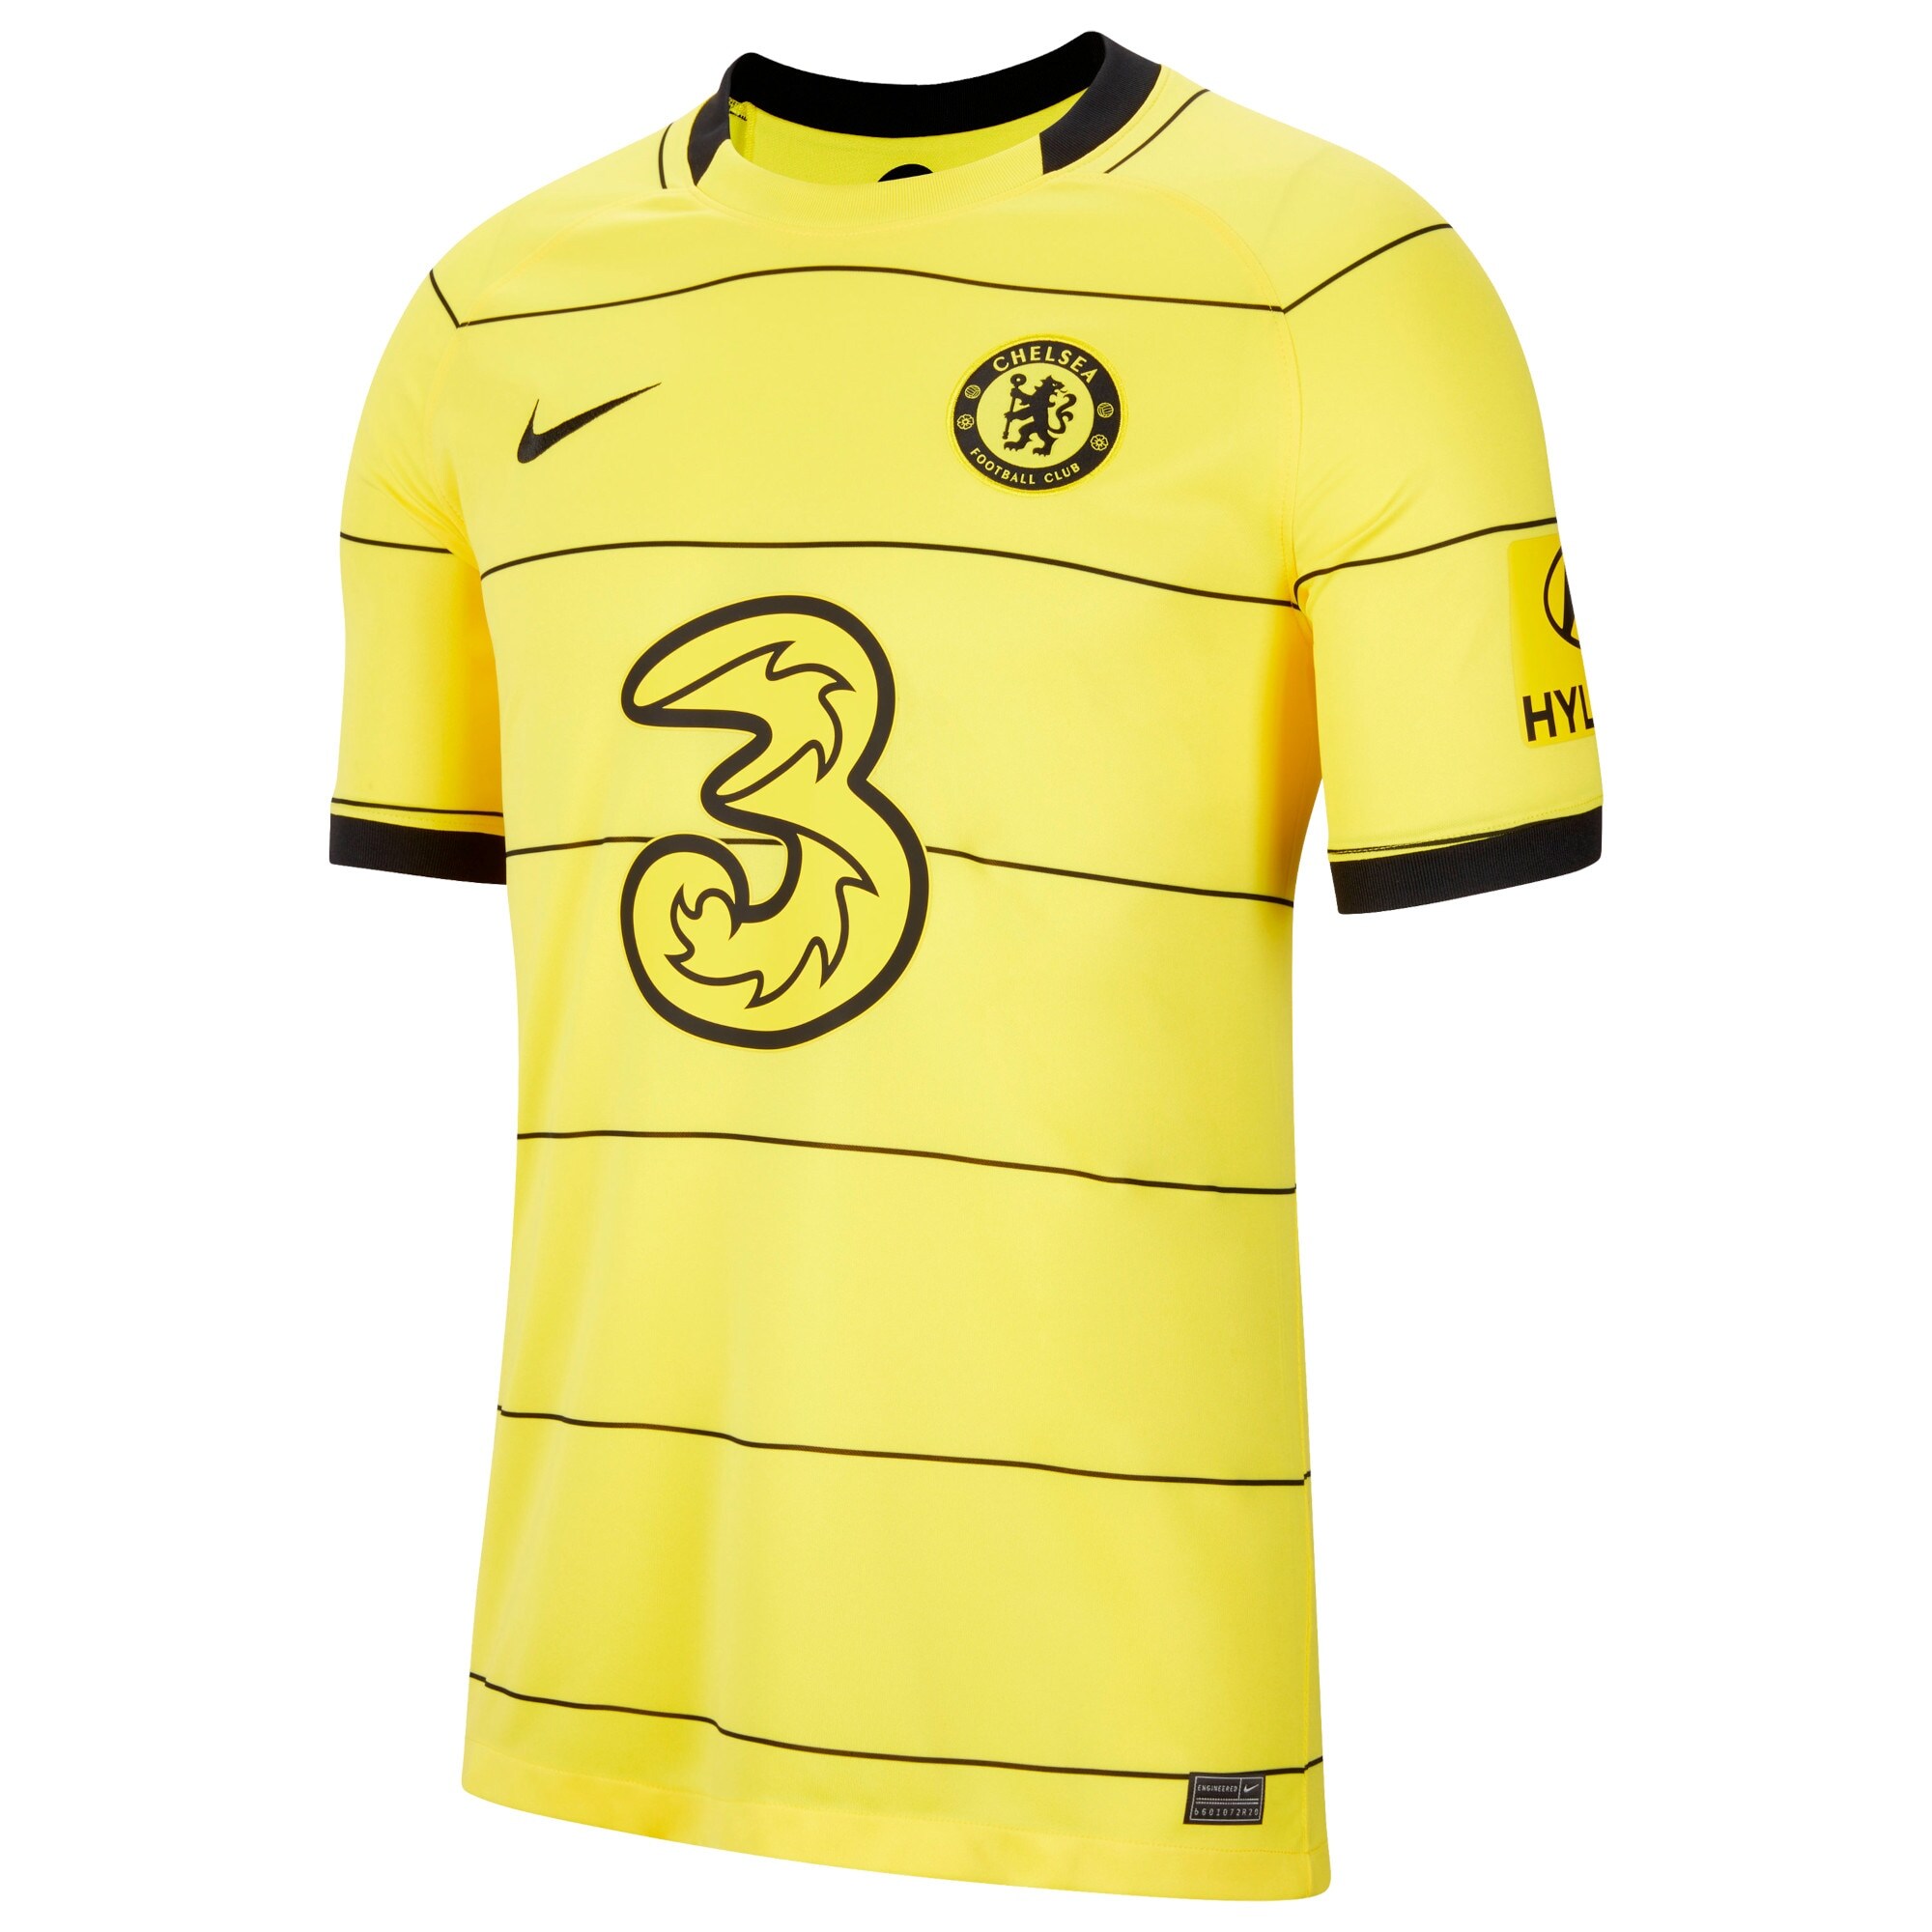 Chelsea Cup Away Stadium Shirt 2021-22 with Loftus-Cheek 12 printing